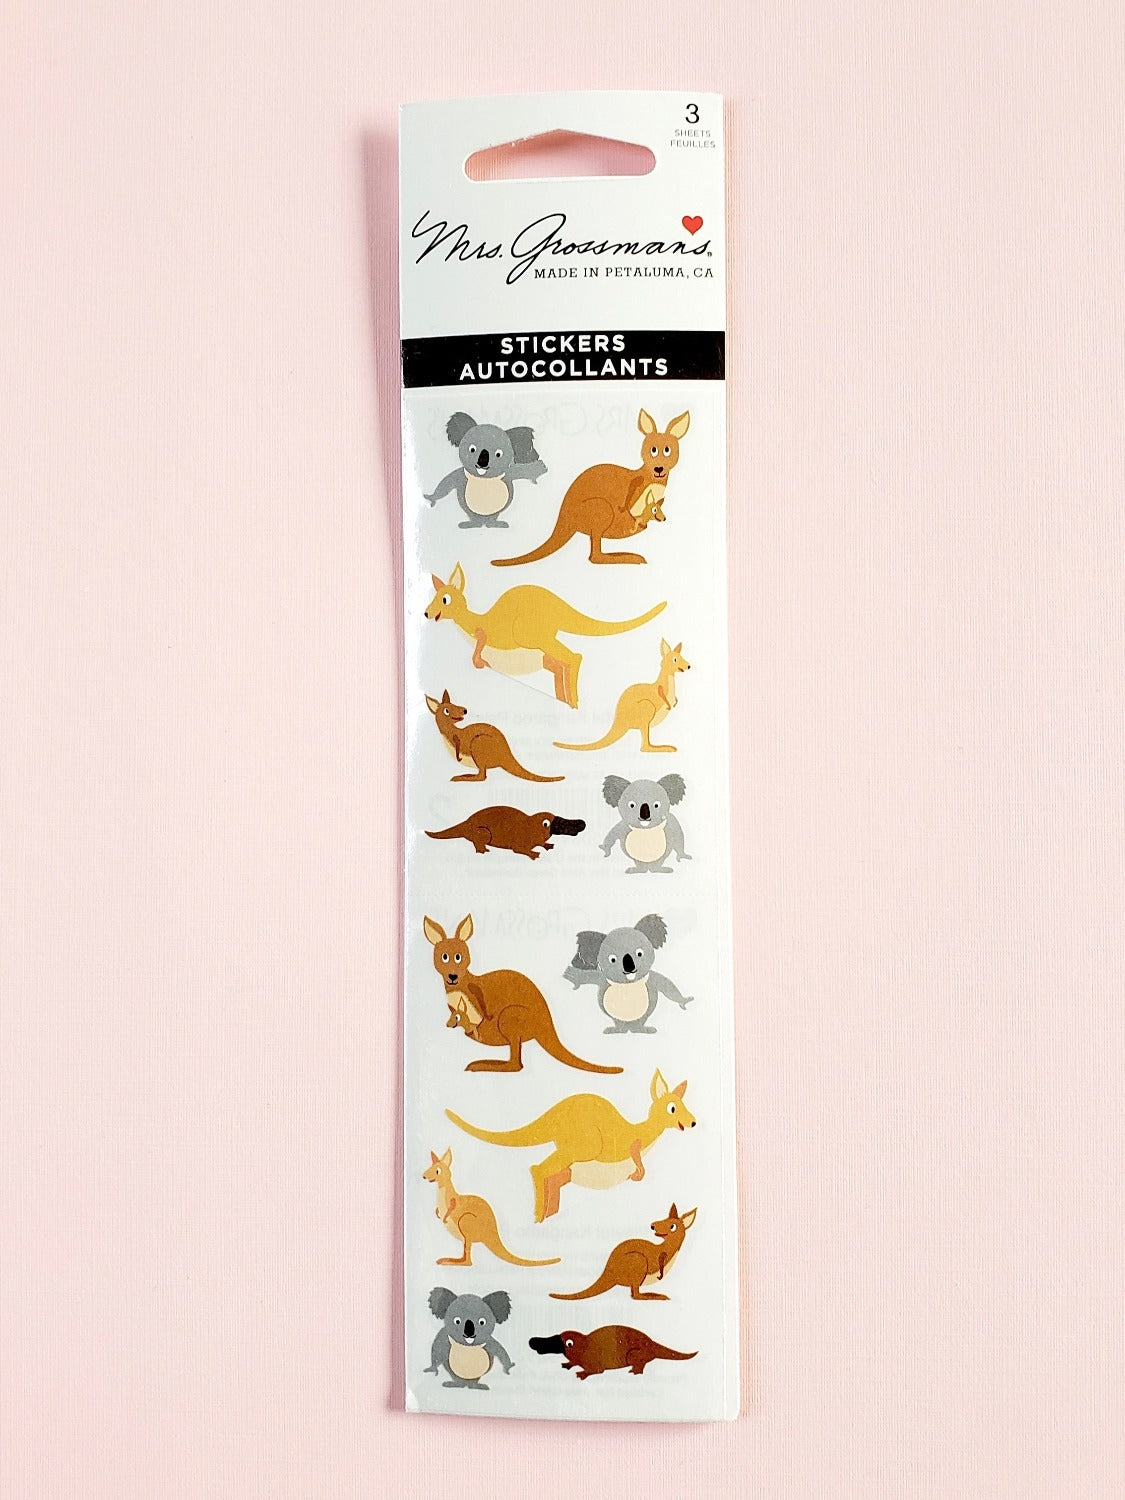 Mrs Grossman's playful kangaroo pals stickers